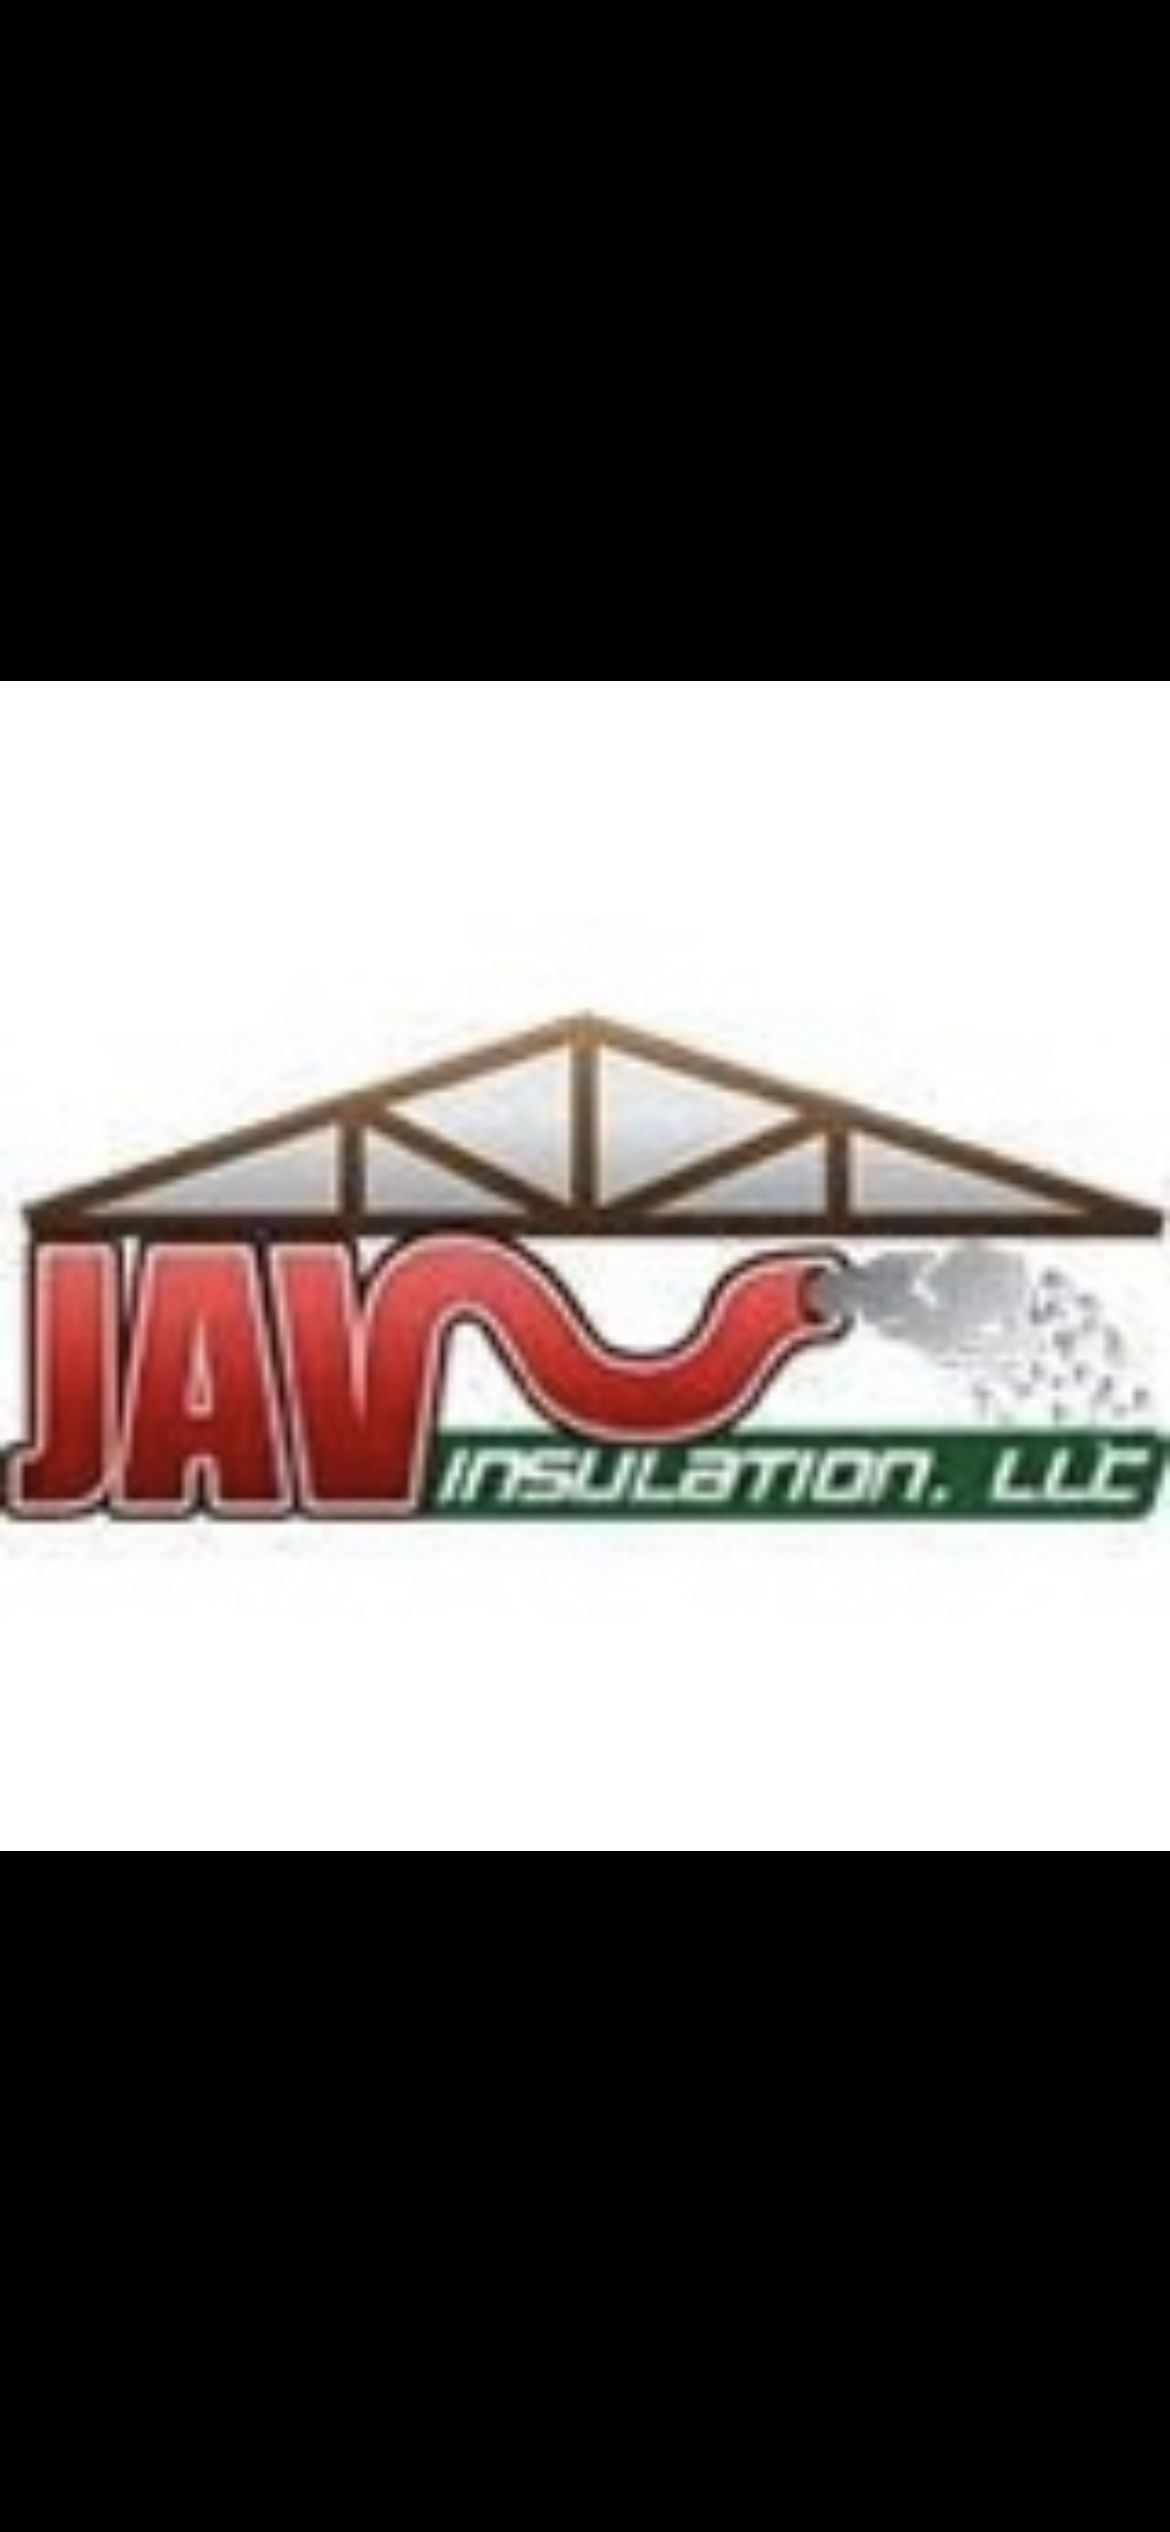 JAV Insulation LLC Profile Picture